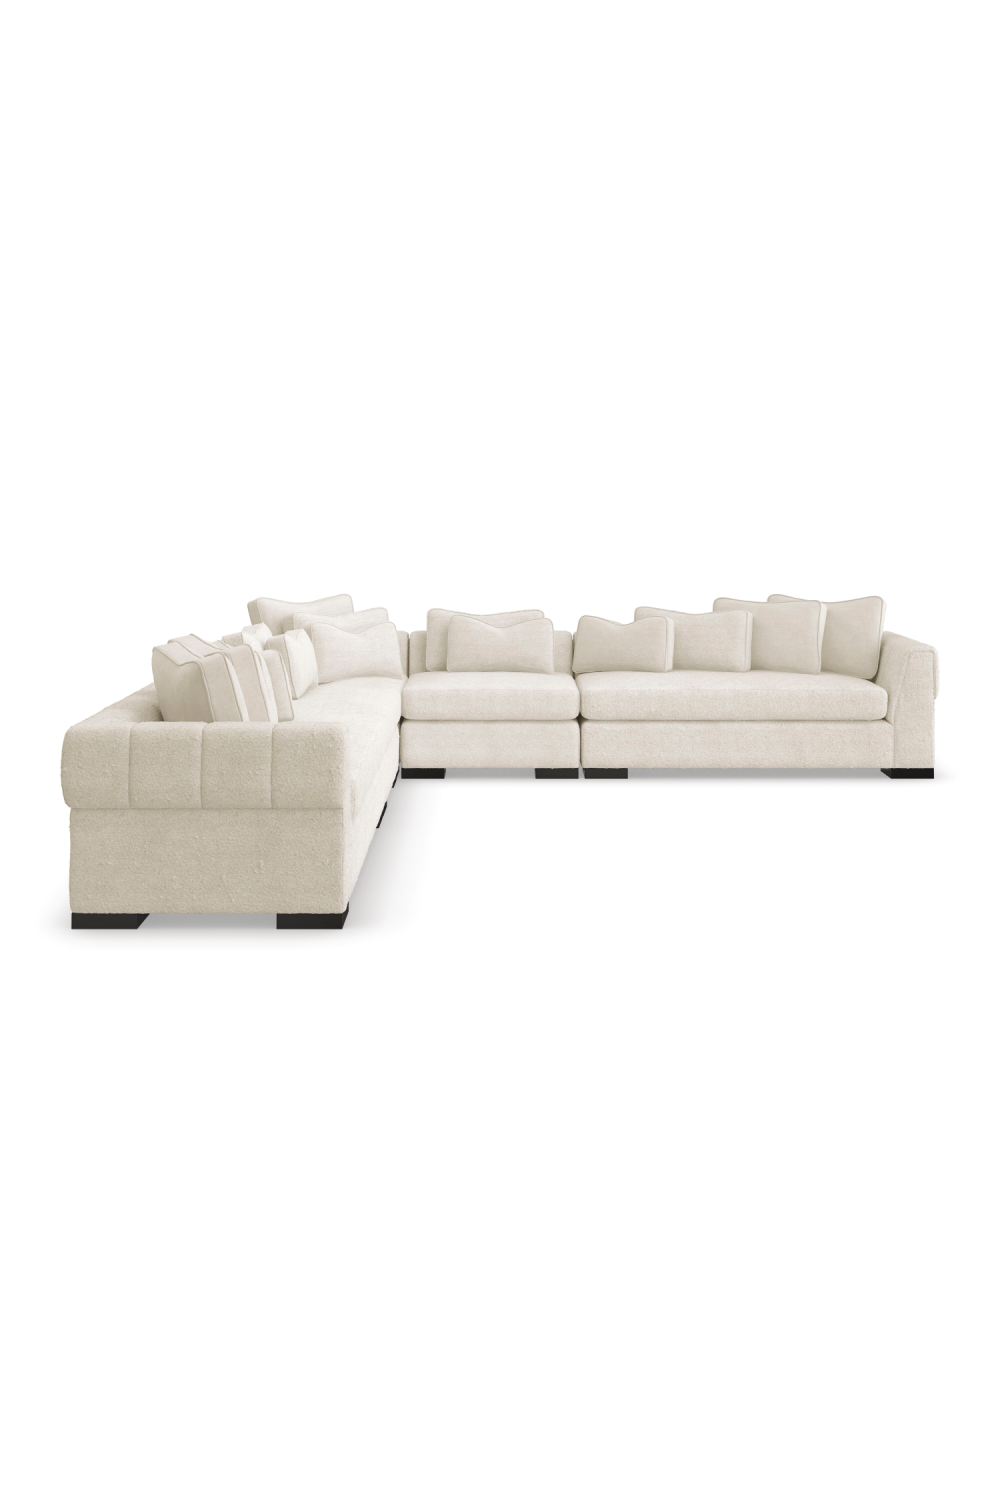 Cream Modern Armless Chair | Caracole Edge | Oroa.com